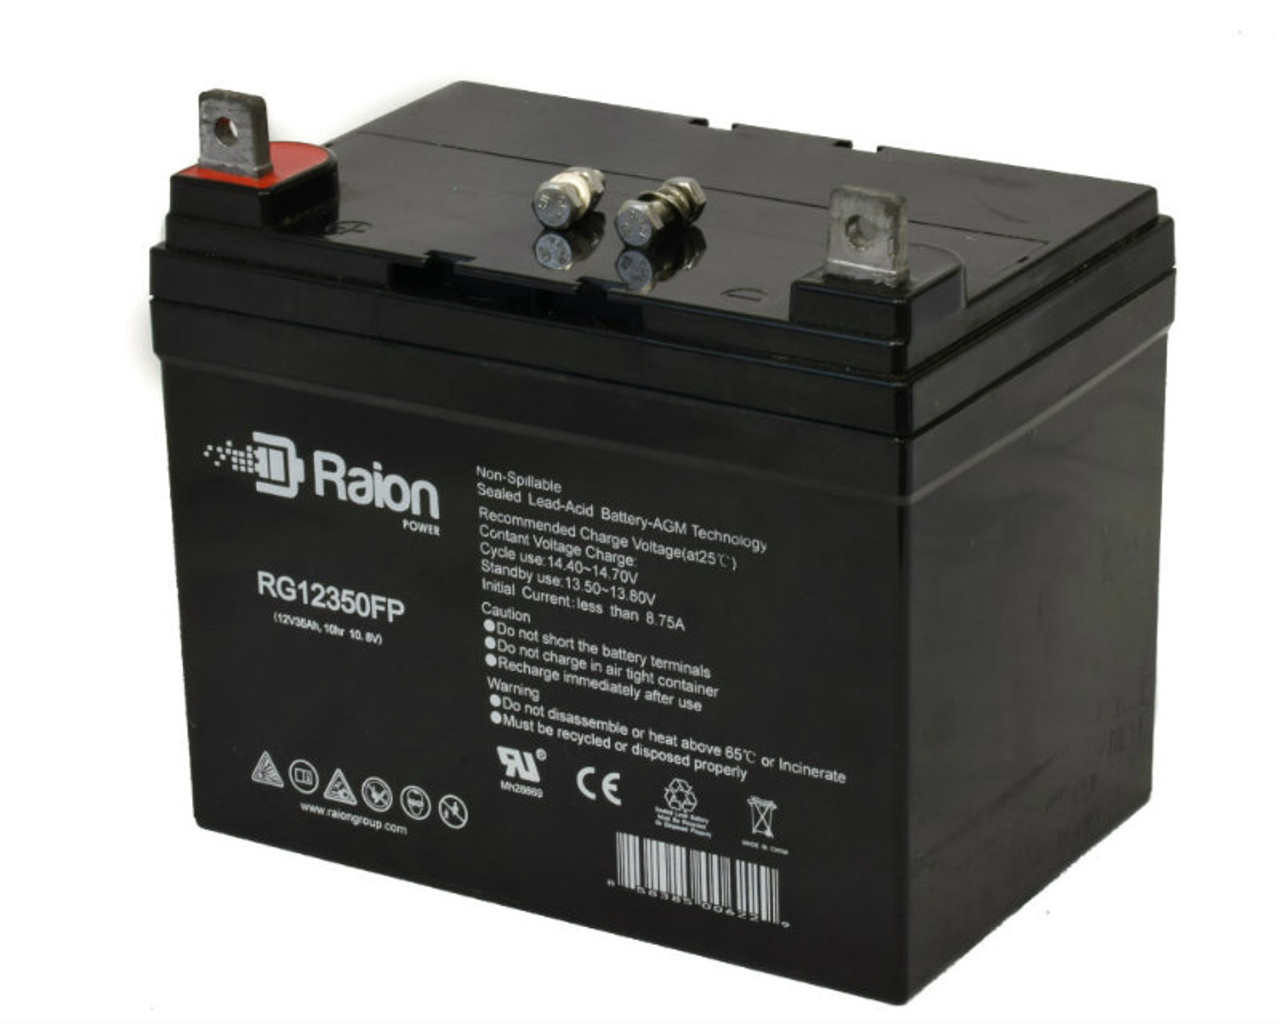 Raion Power Replacement 12V 35Ah RG12350FP Battery for Ingersoll Equipment 1212G